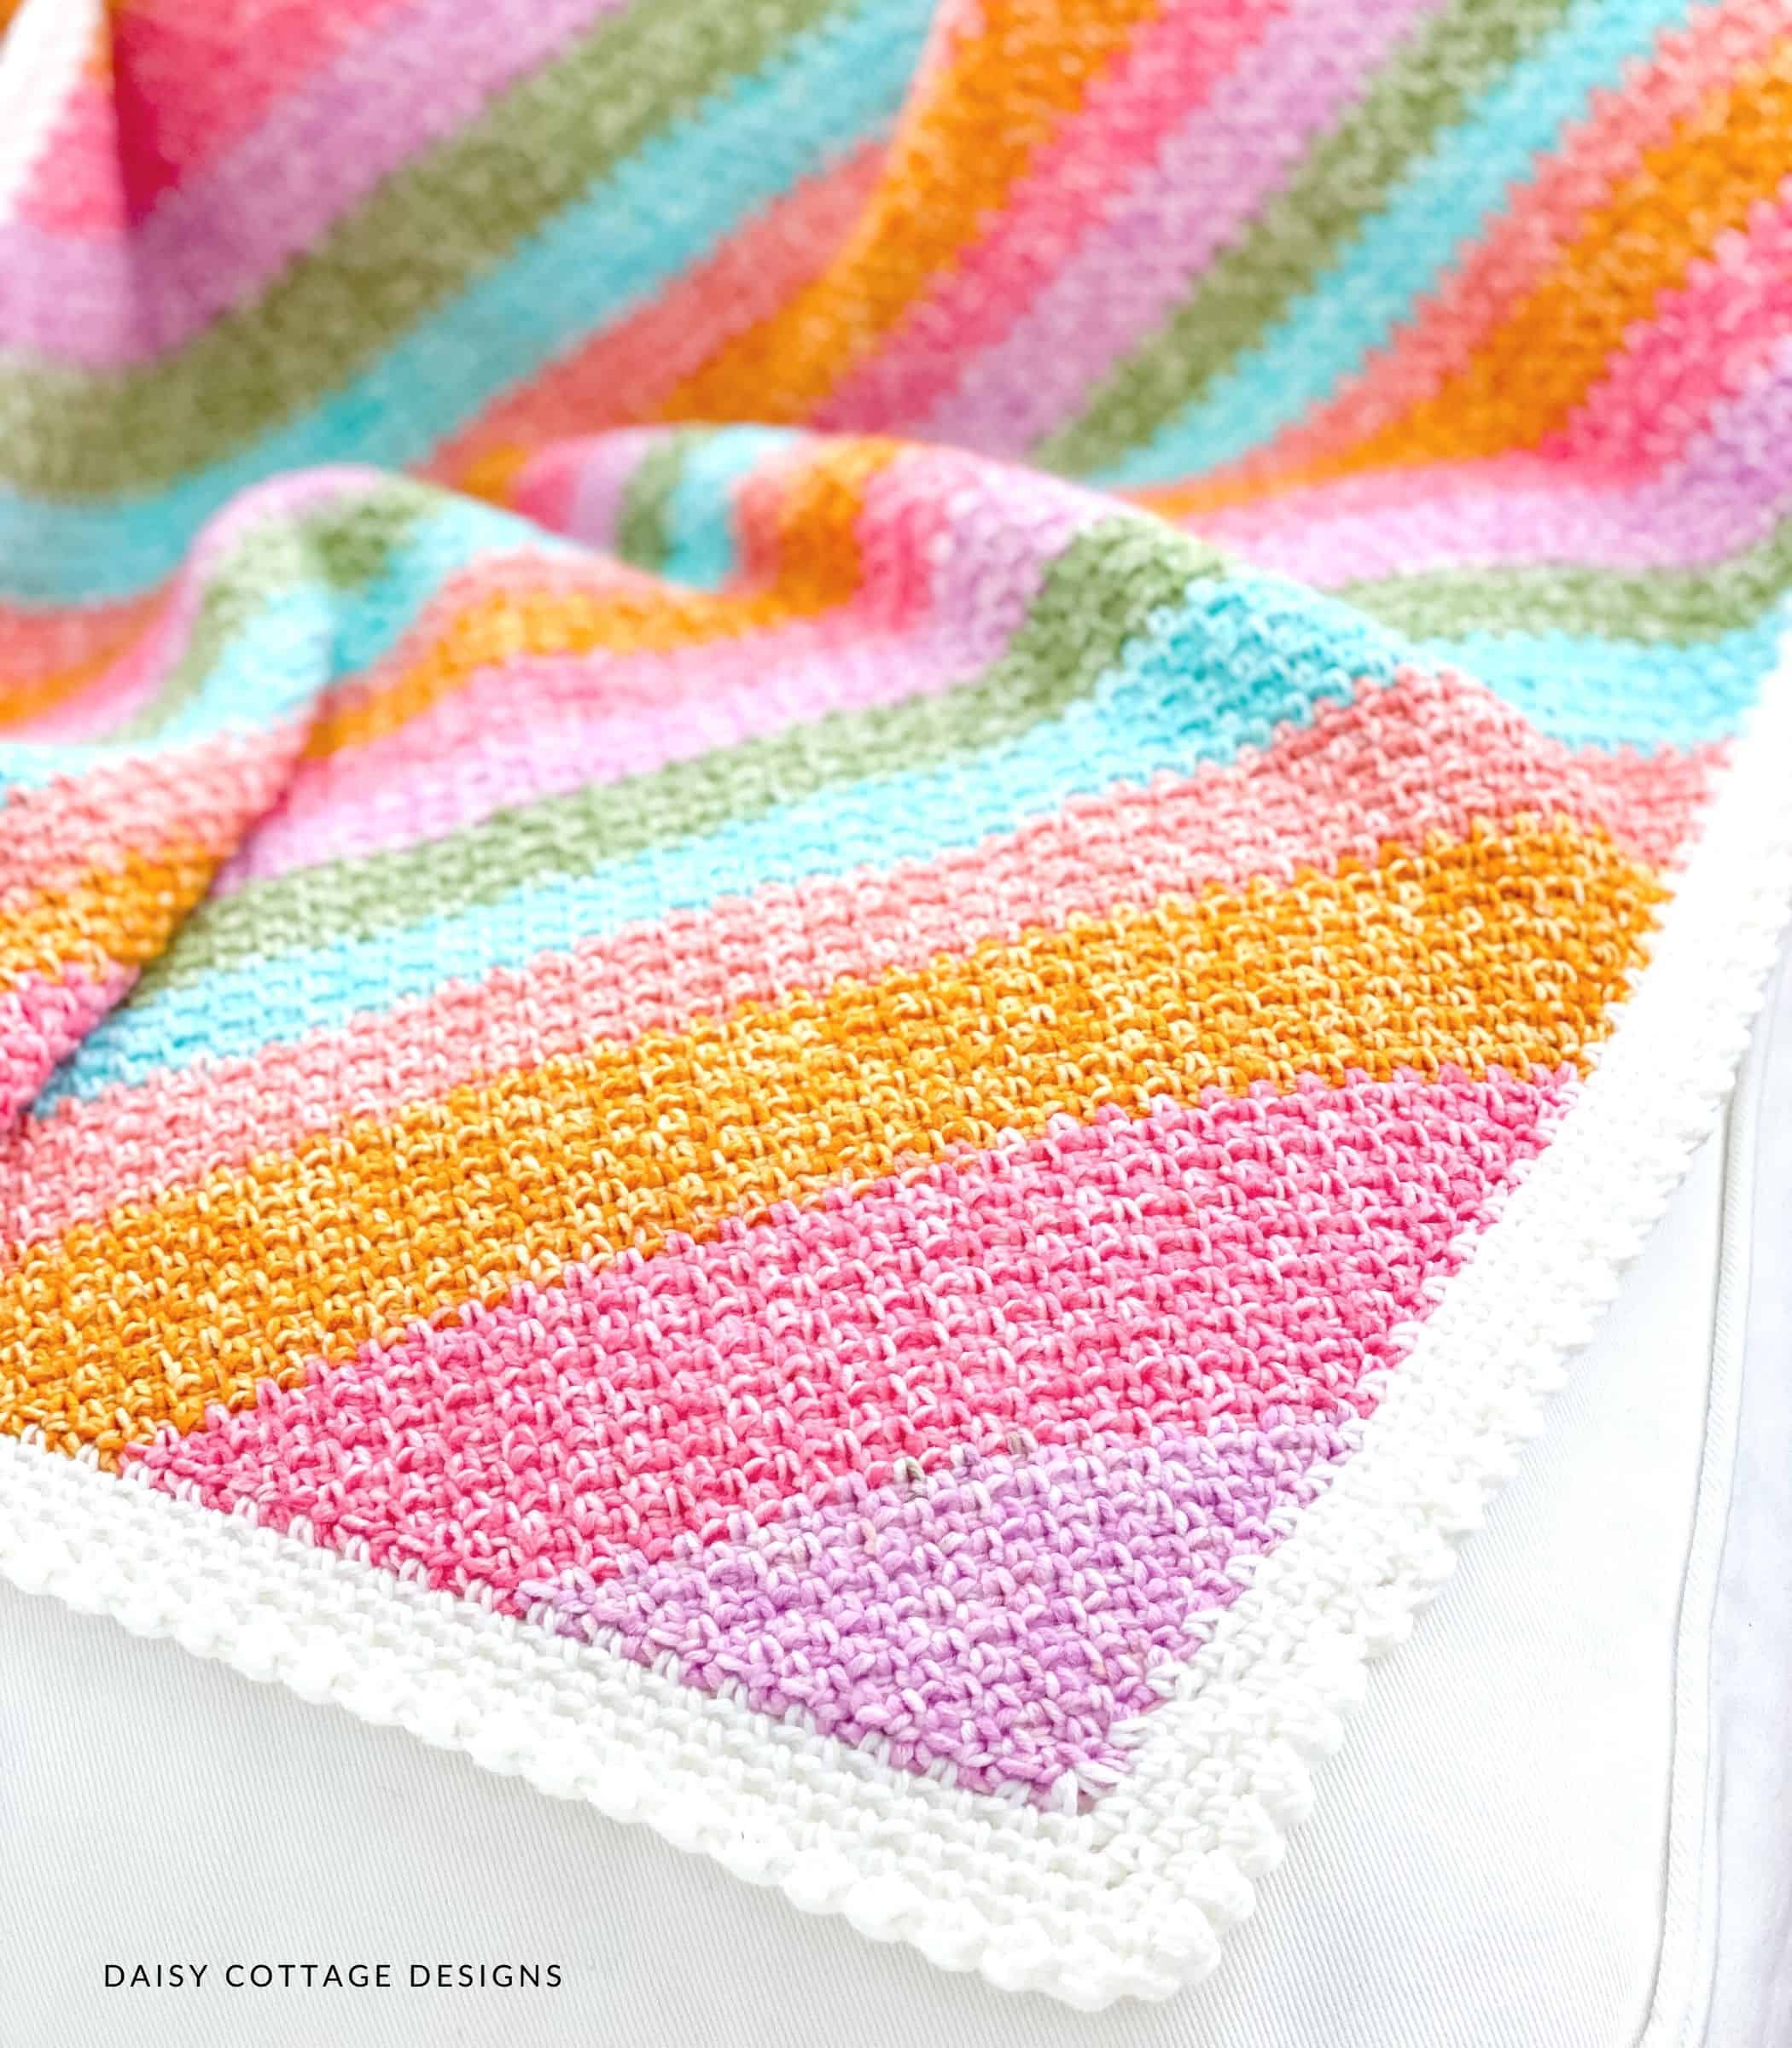 Crochet blanket made with Mandala Yarn